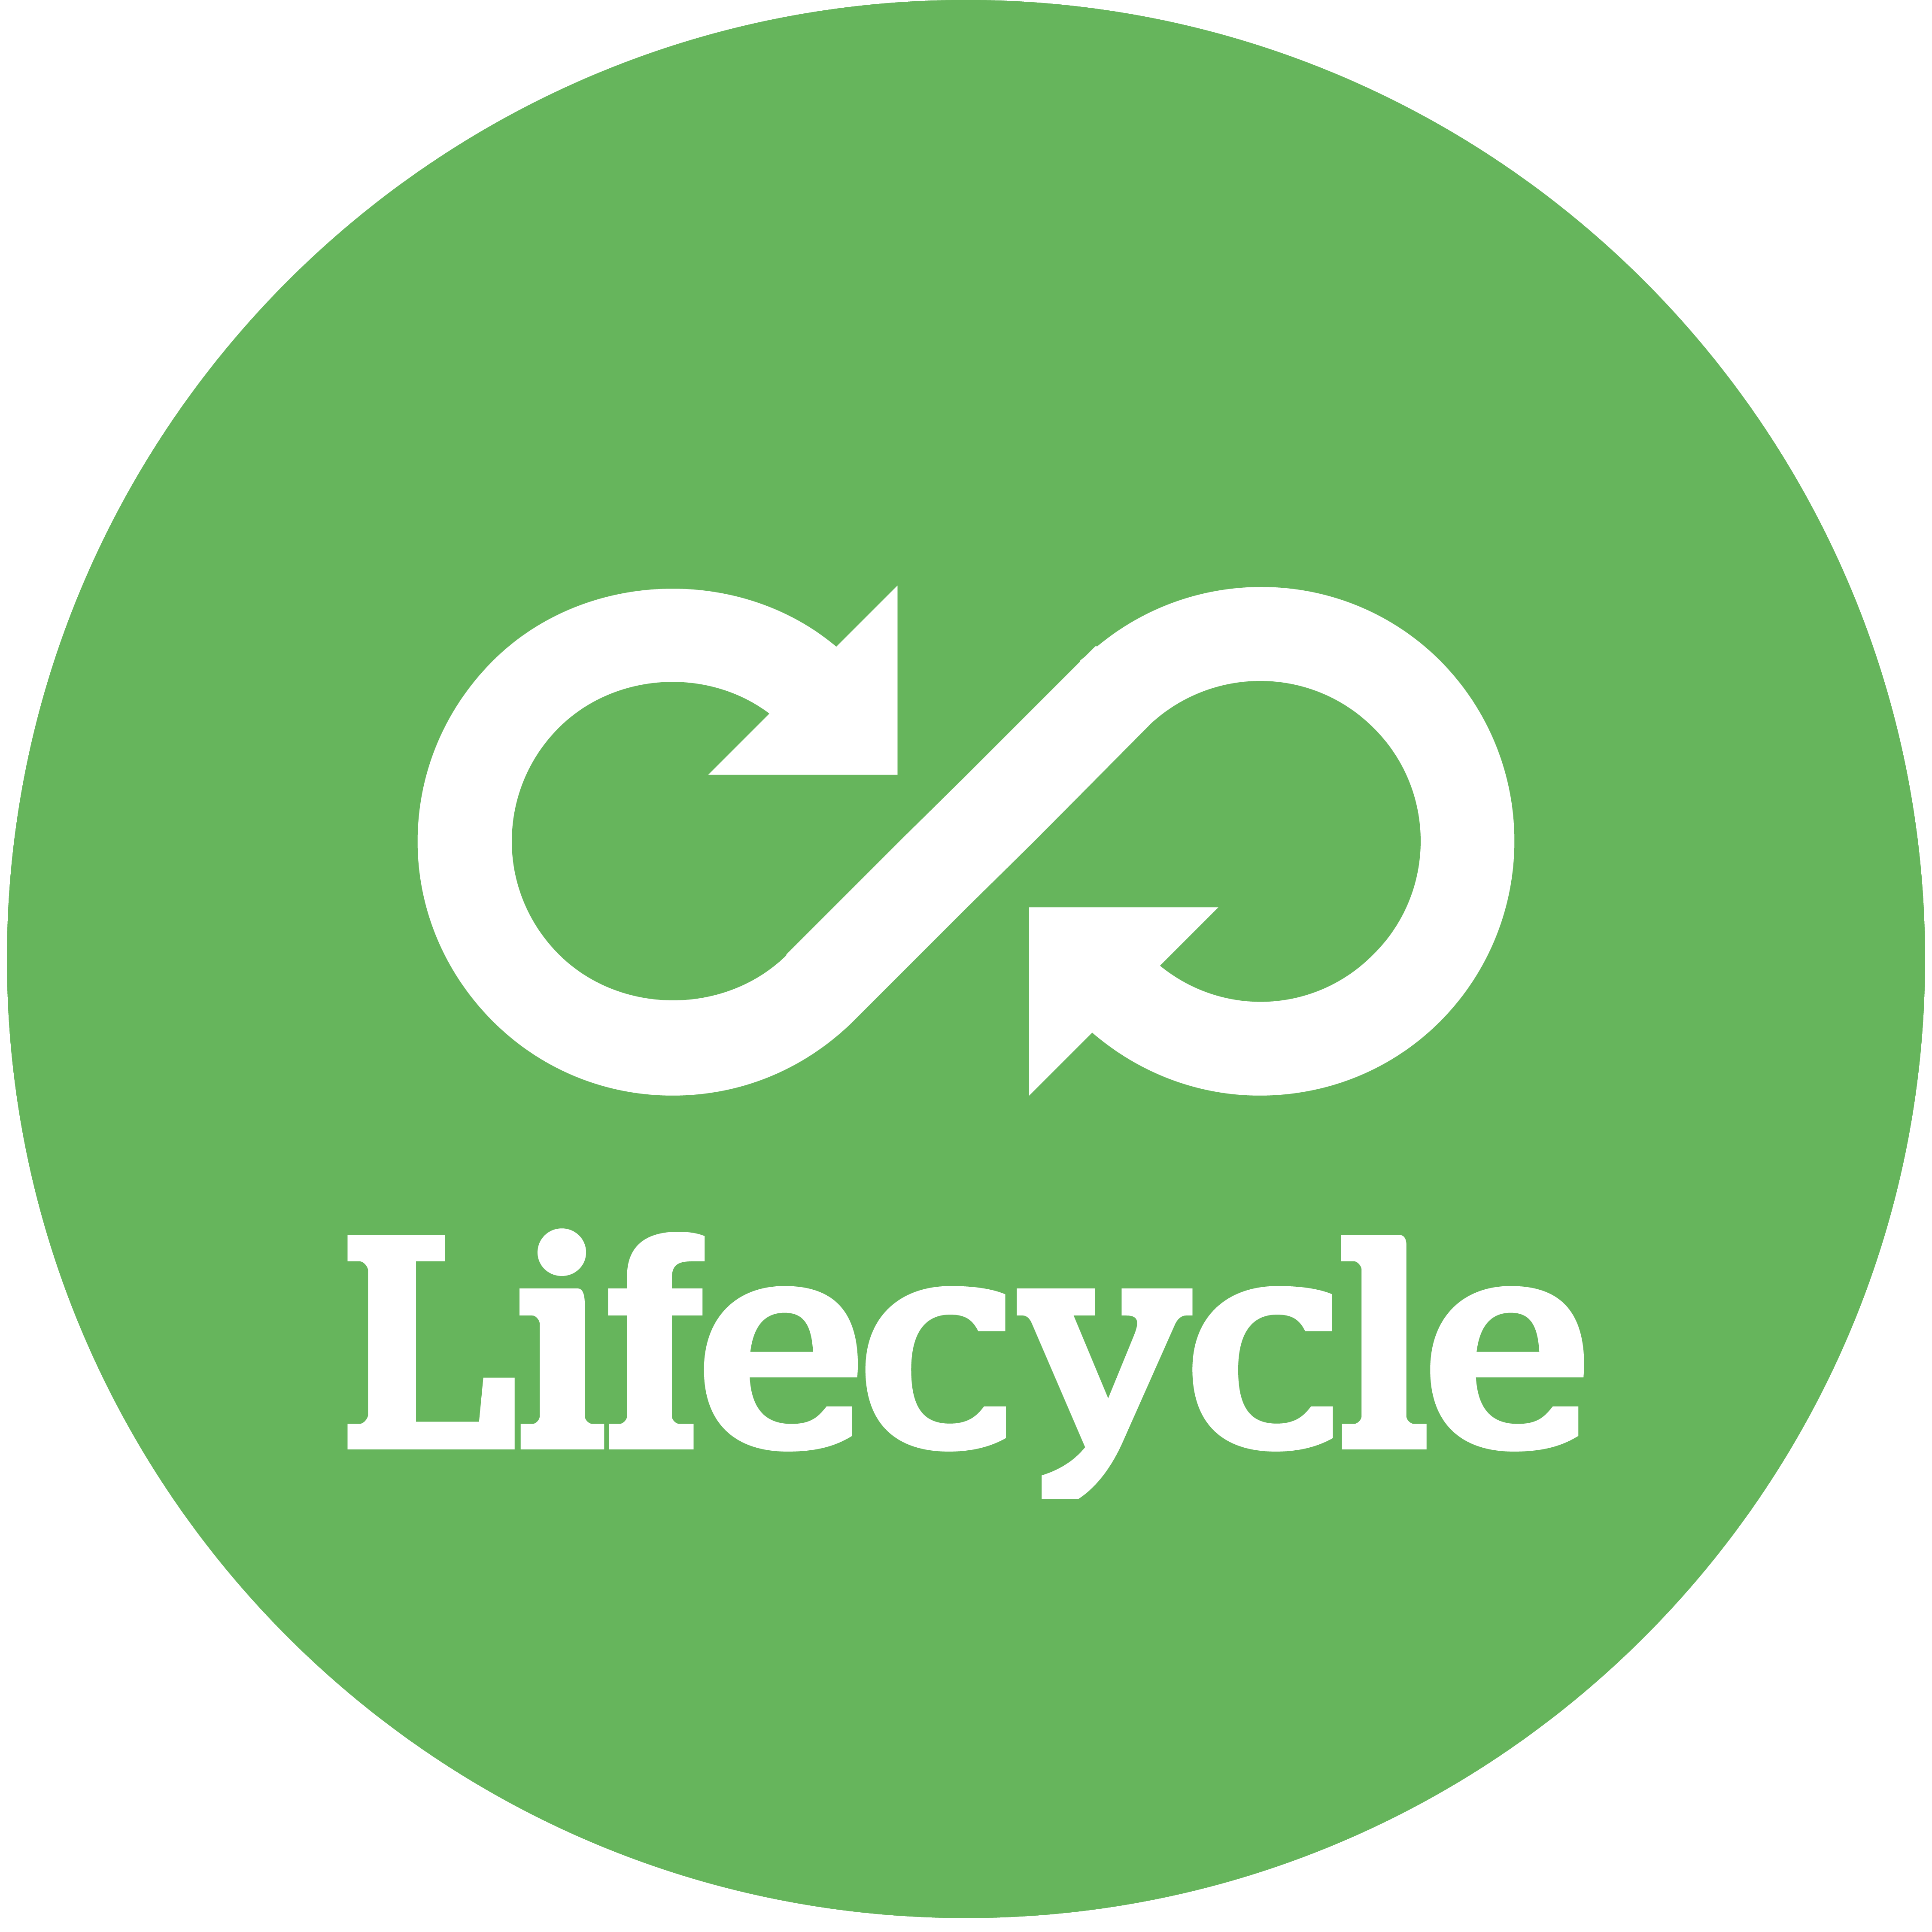 Icon saying 'lifecycle' with infinity symbol